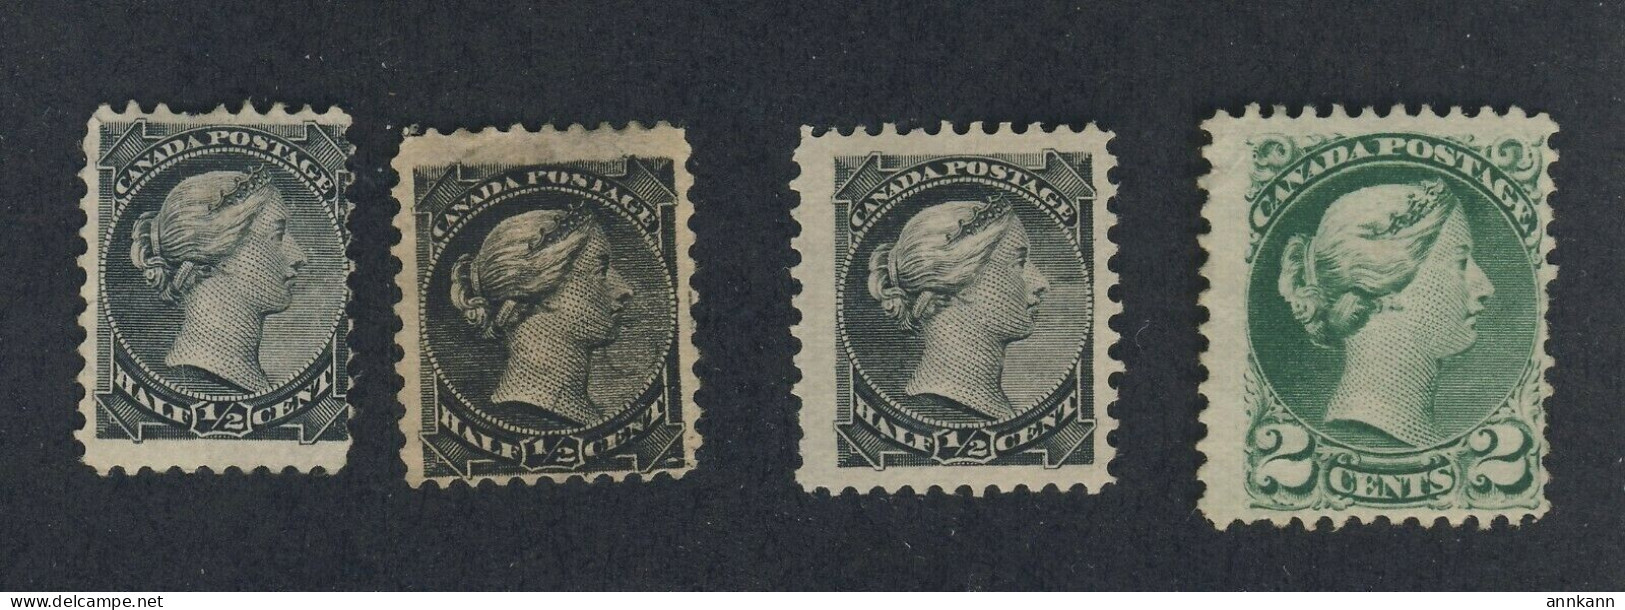 4x Canada Small Queen MNG Stamps 3x #34-1/2c F F/VF VF #36-2c Fine GV = $100.00 - Nuevos